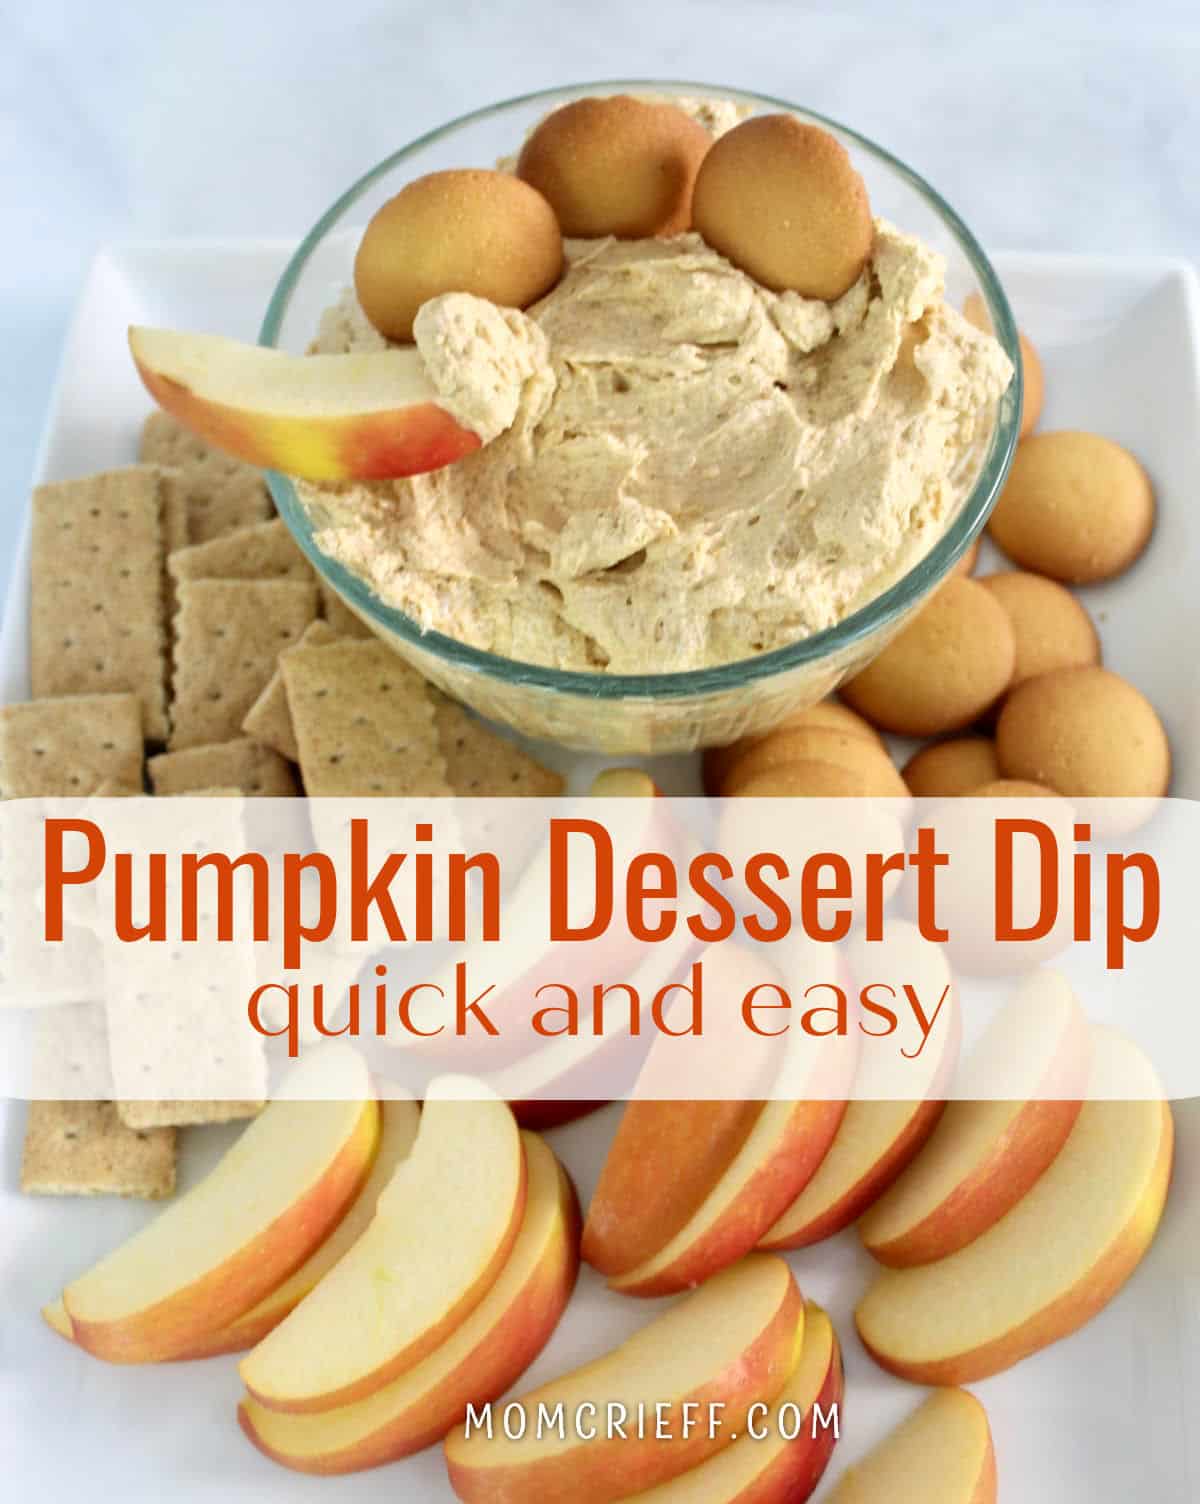 pumpkin dip with averlay stating pumpkin dessert dip quick and easy